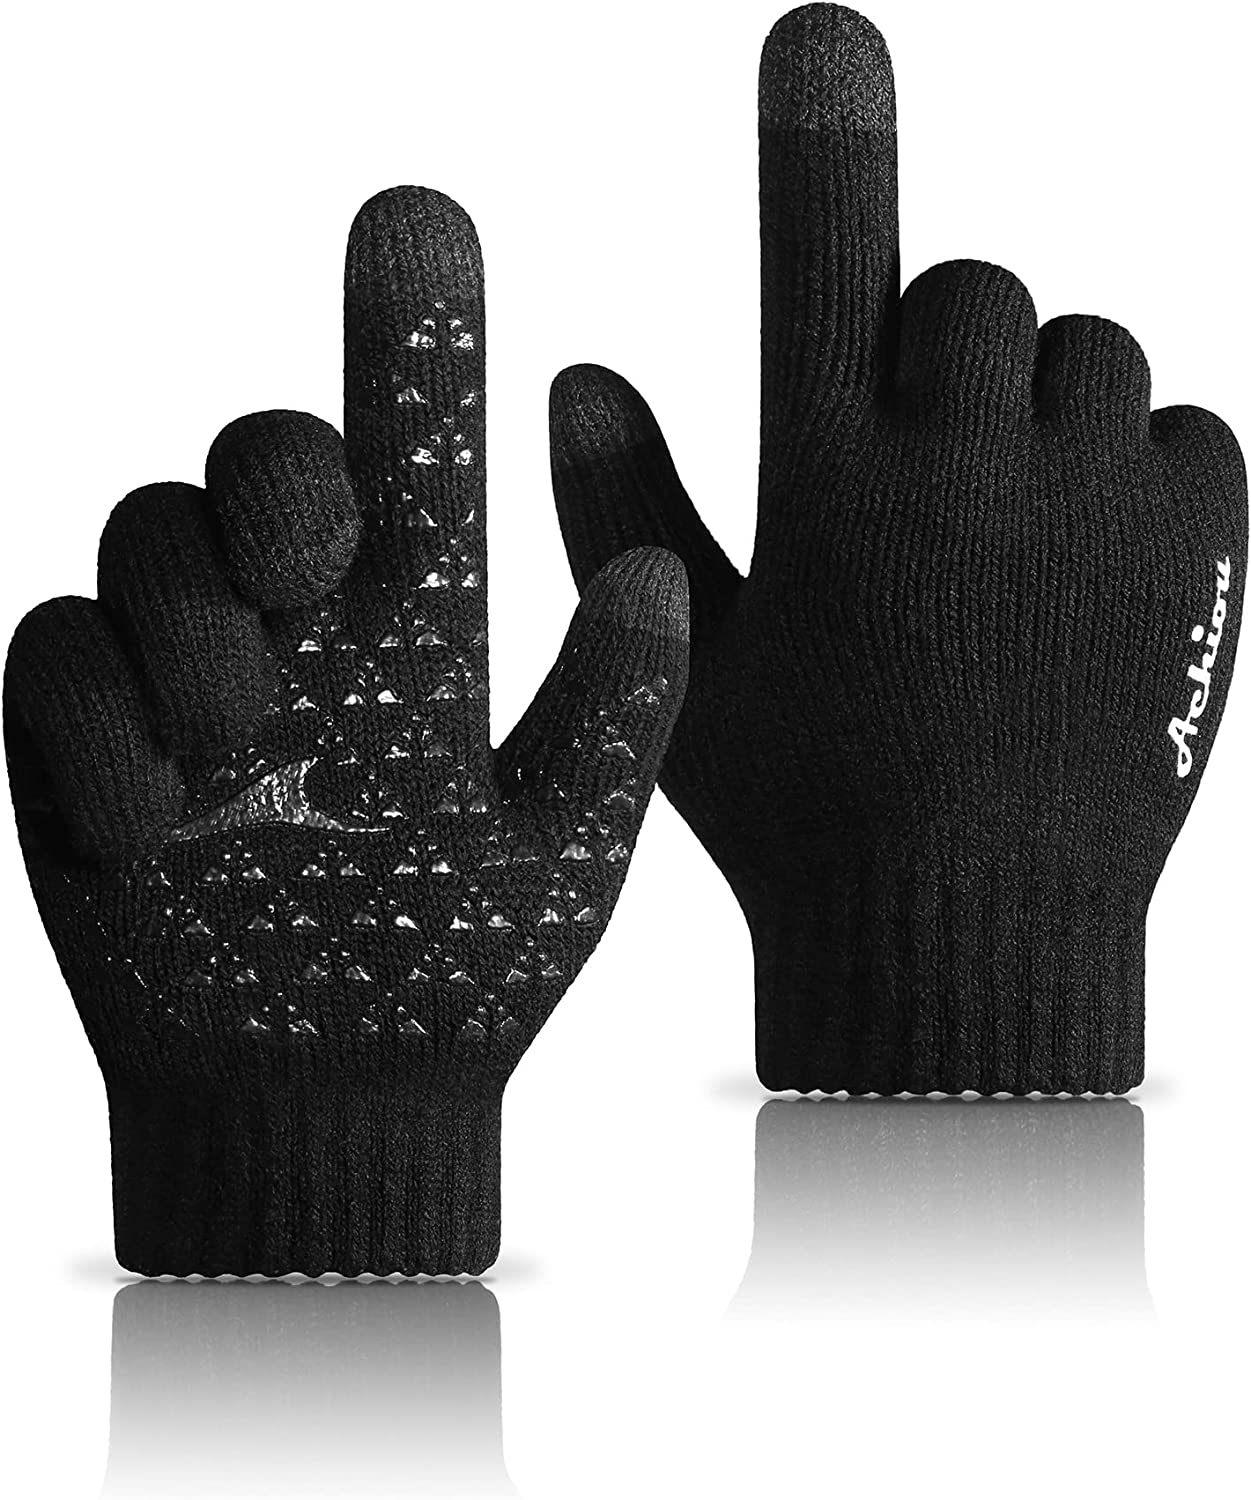 achiou winter gloves for men women